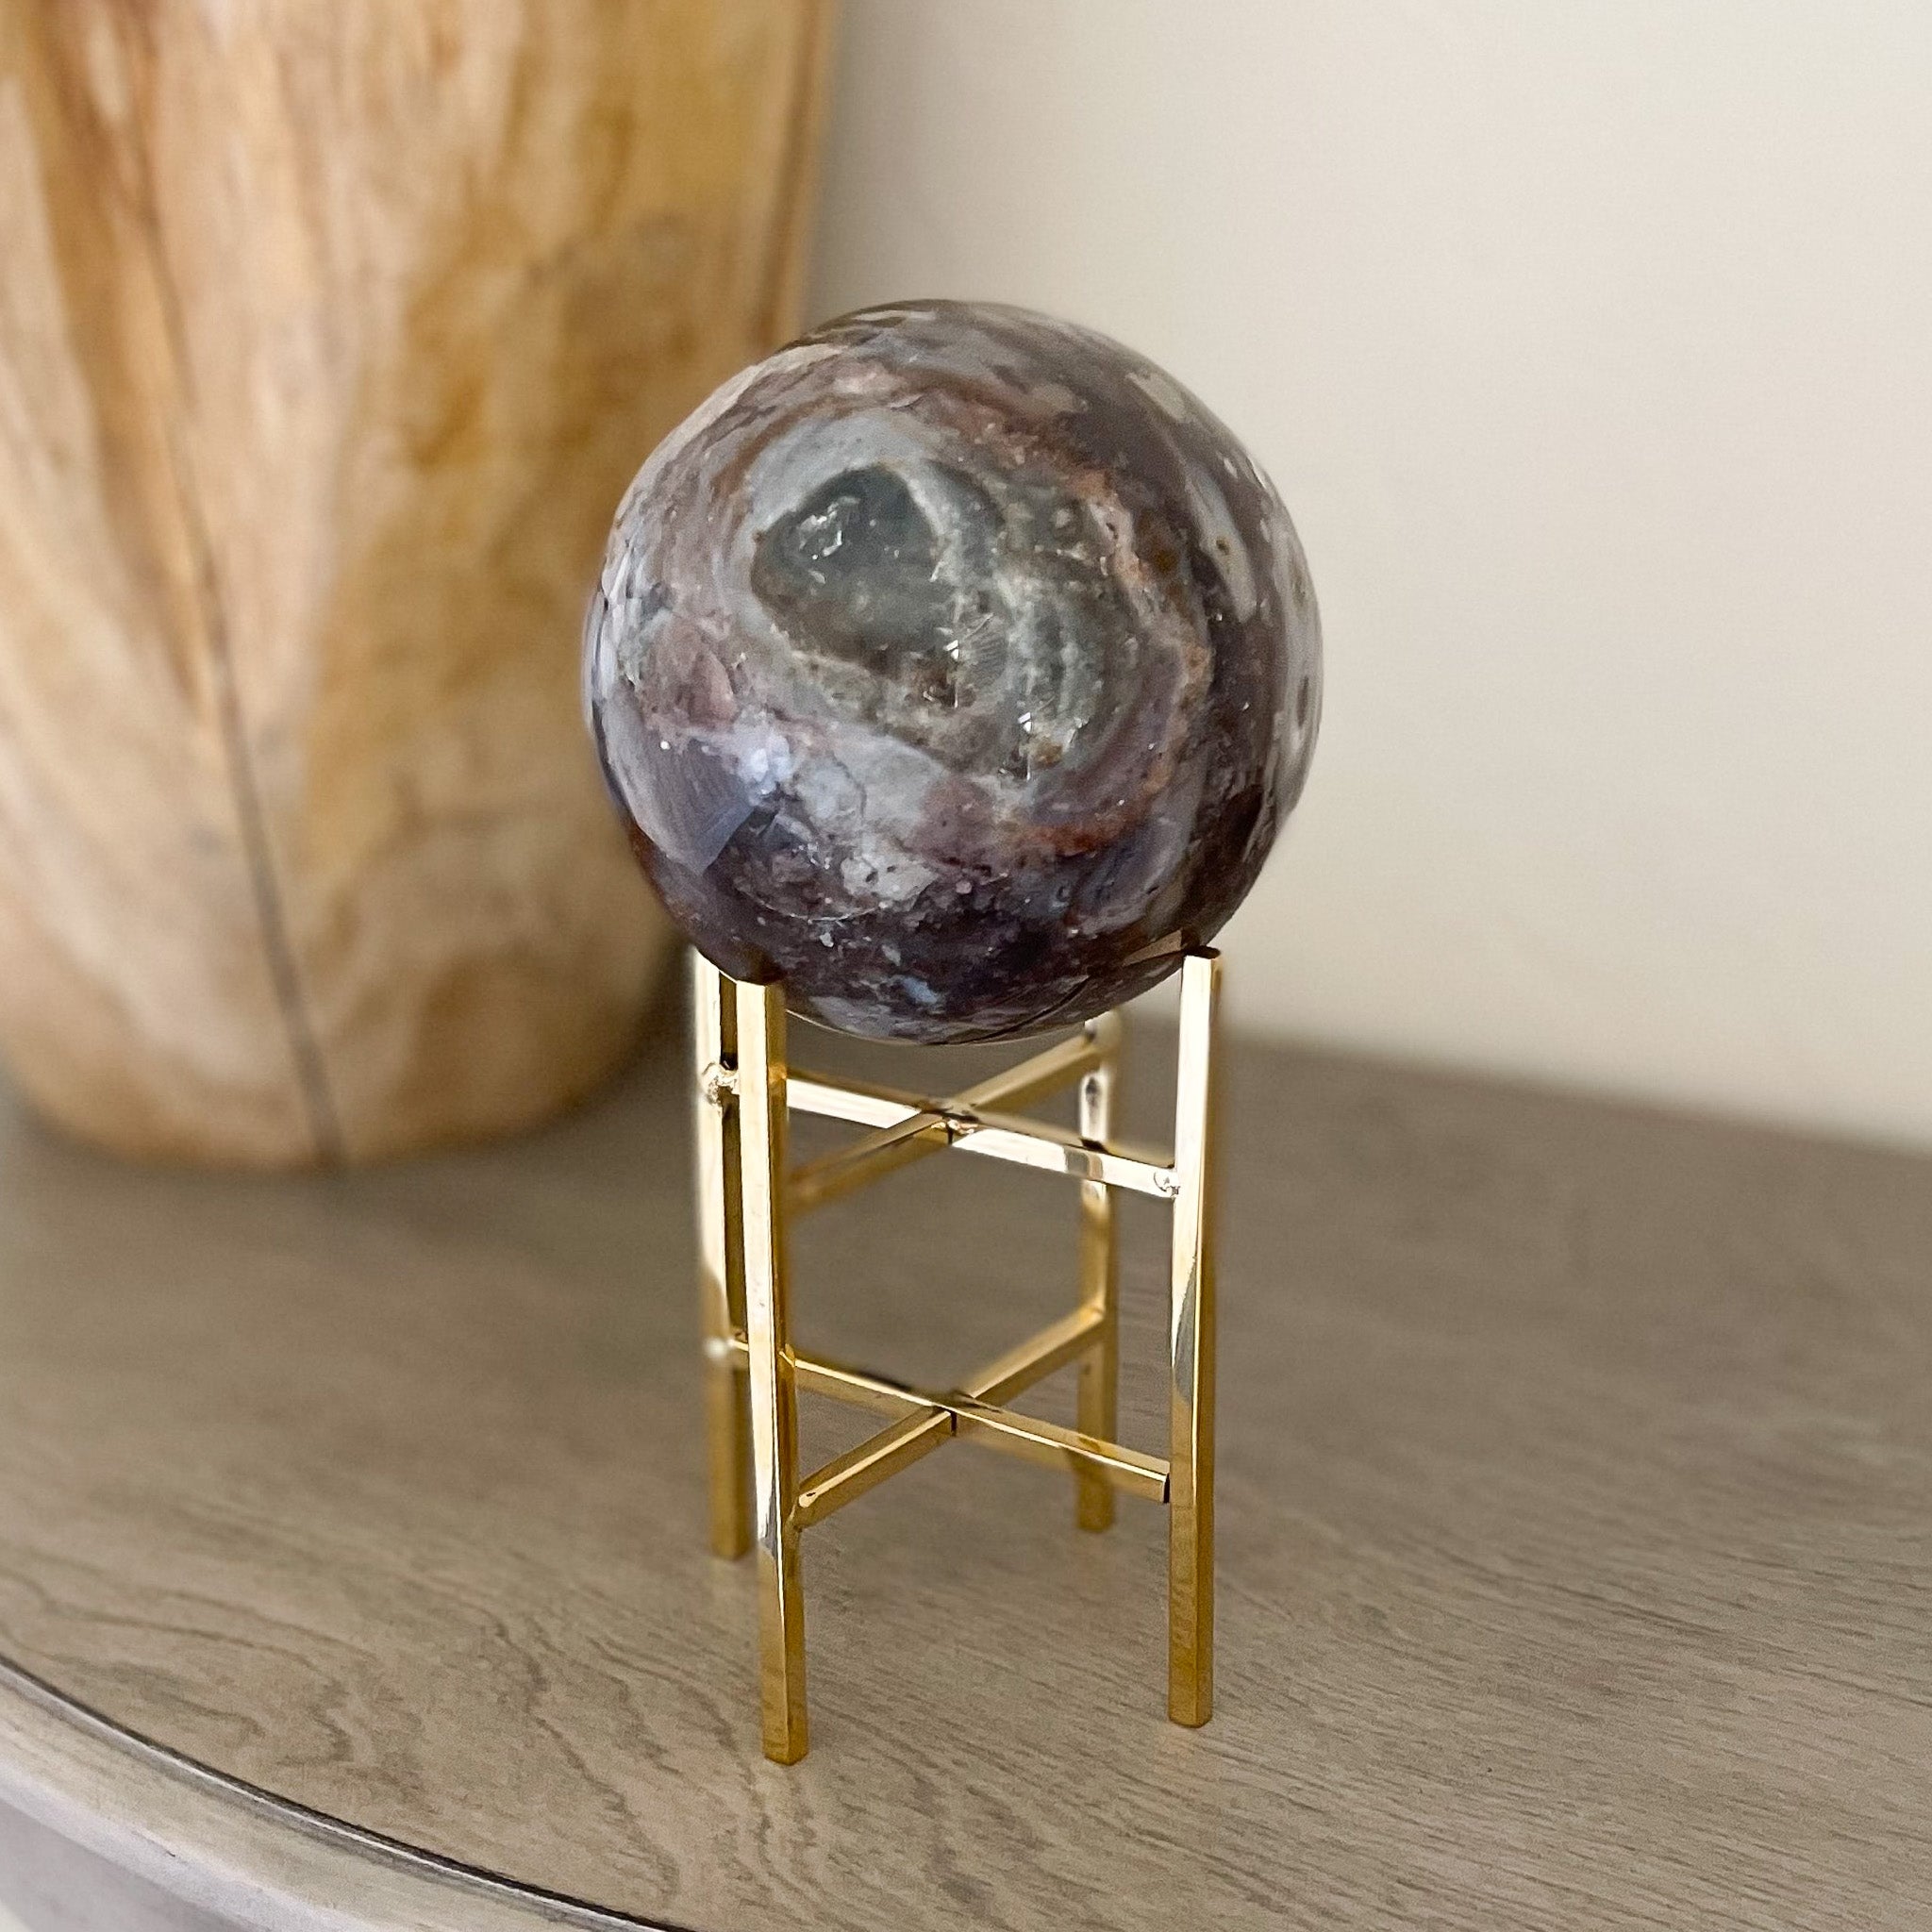 madagascar ocean jasper crystal ball on gold stand, decorative object